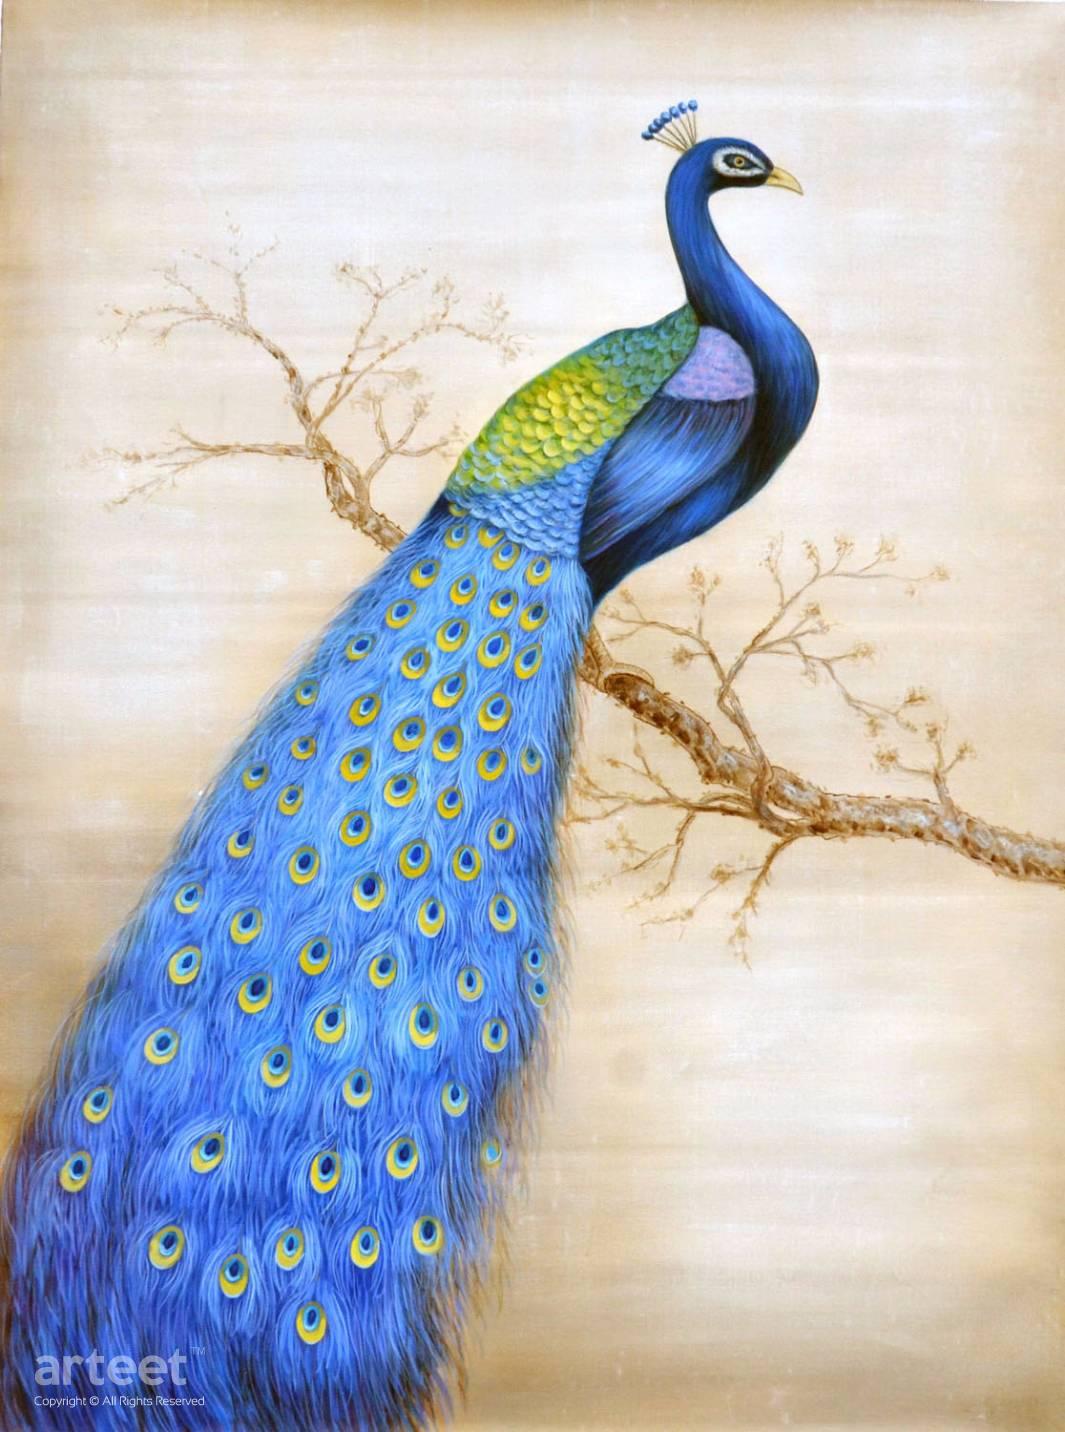 Mr Peacock | Art Paintings for Sale, Online Gallery